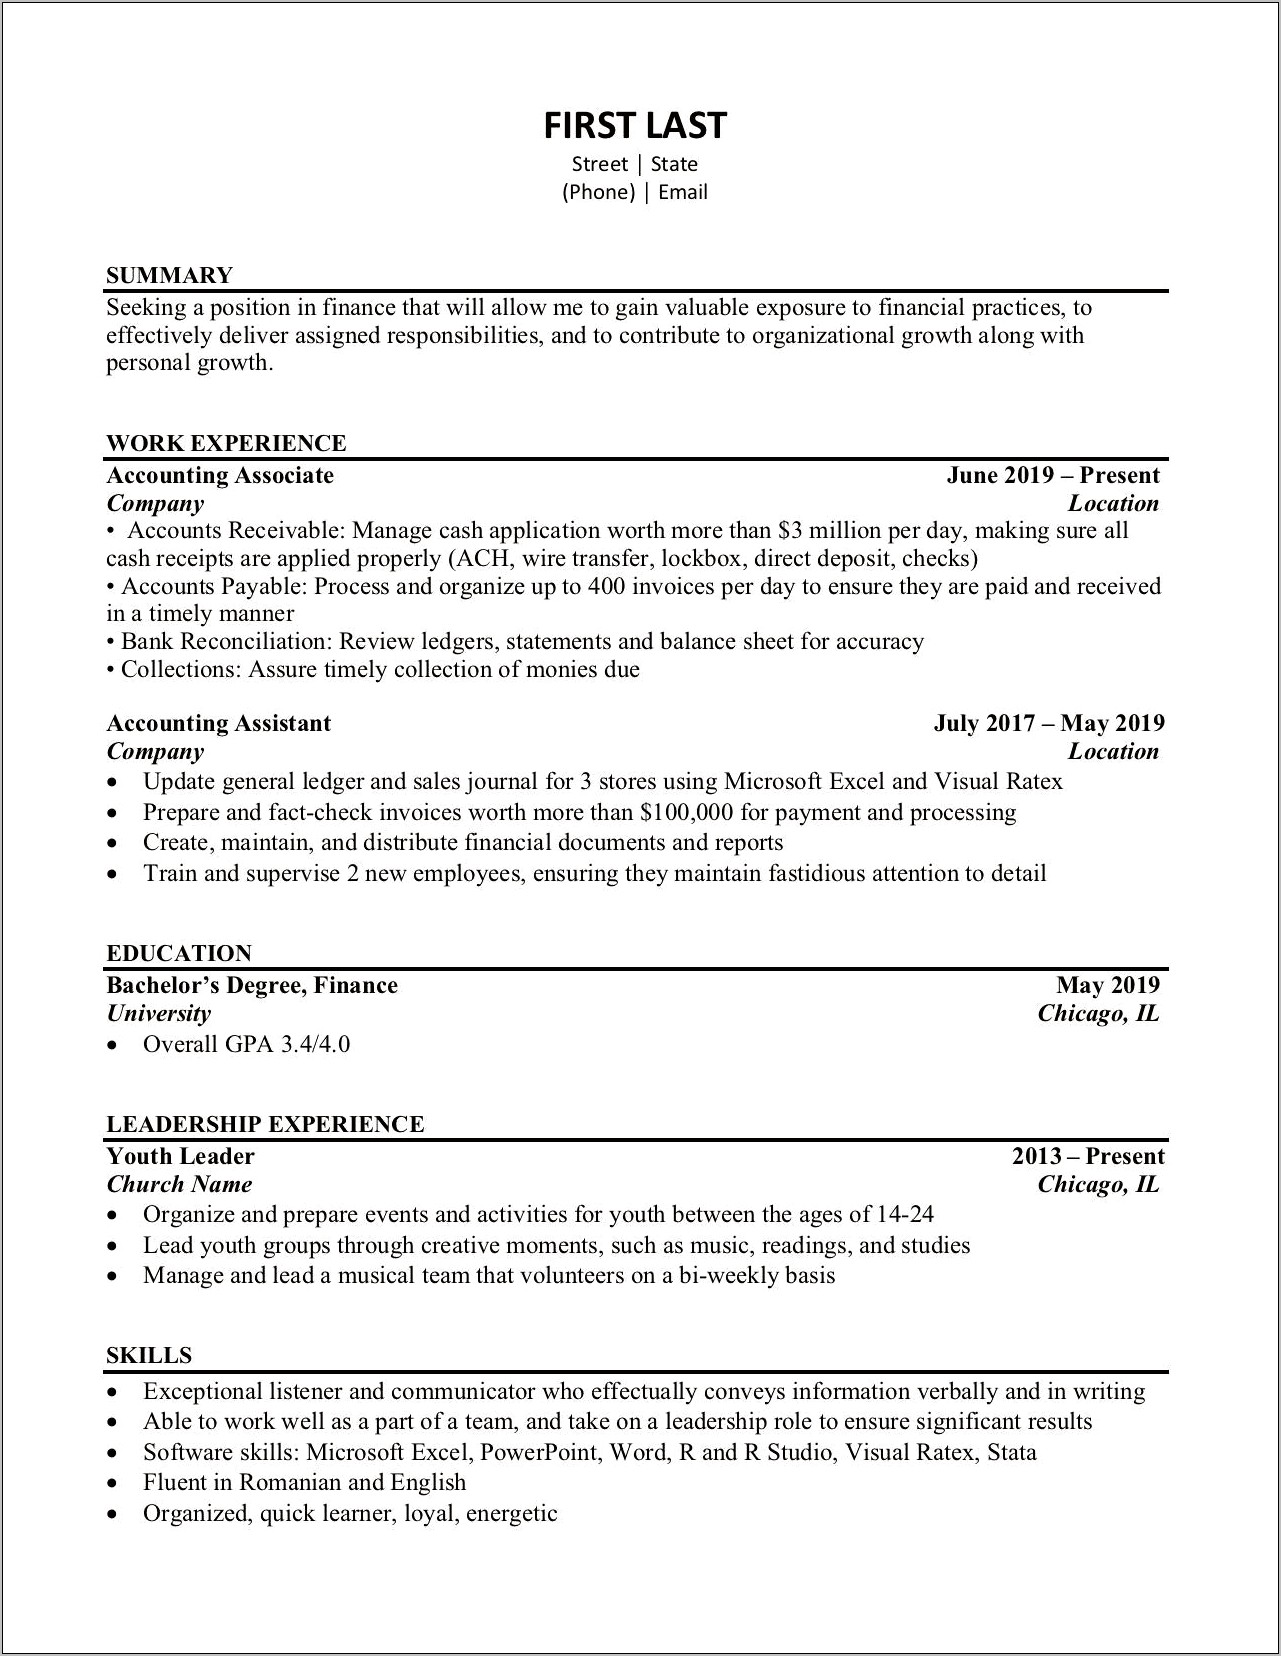 Bank Reconciliation Job Description Resume